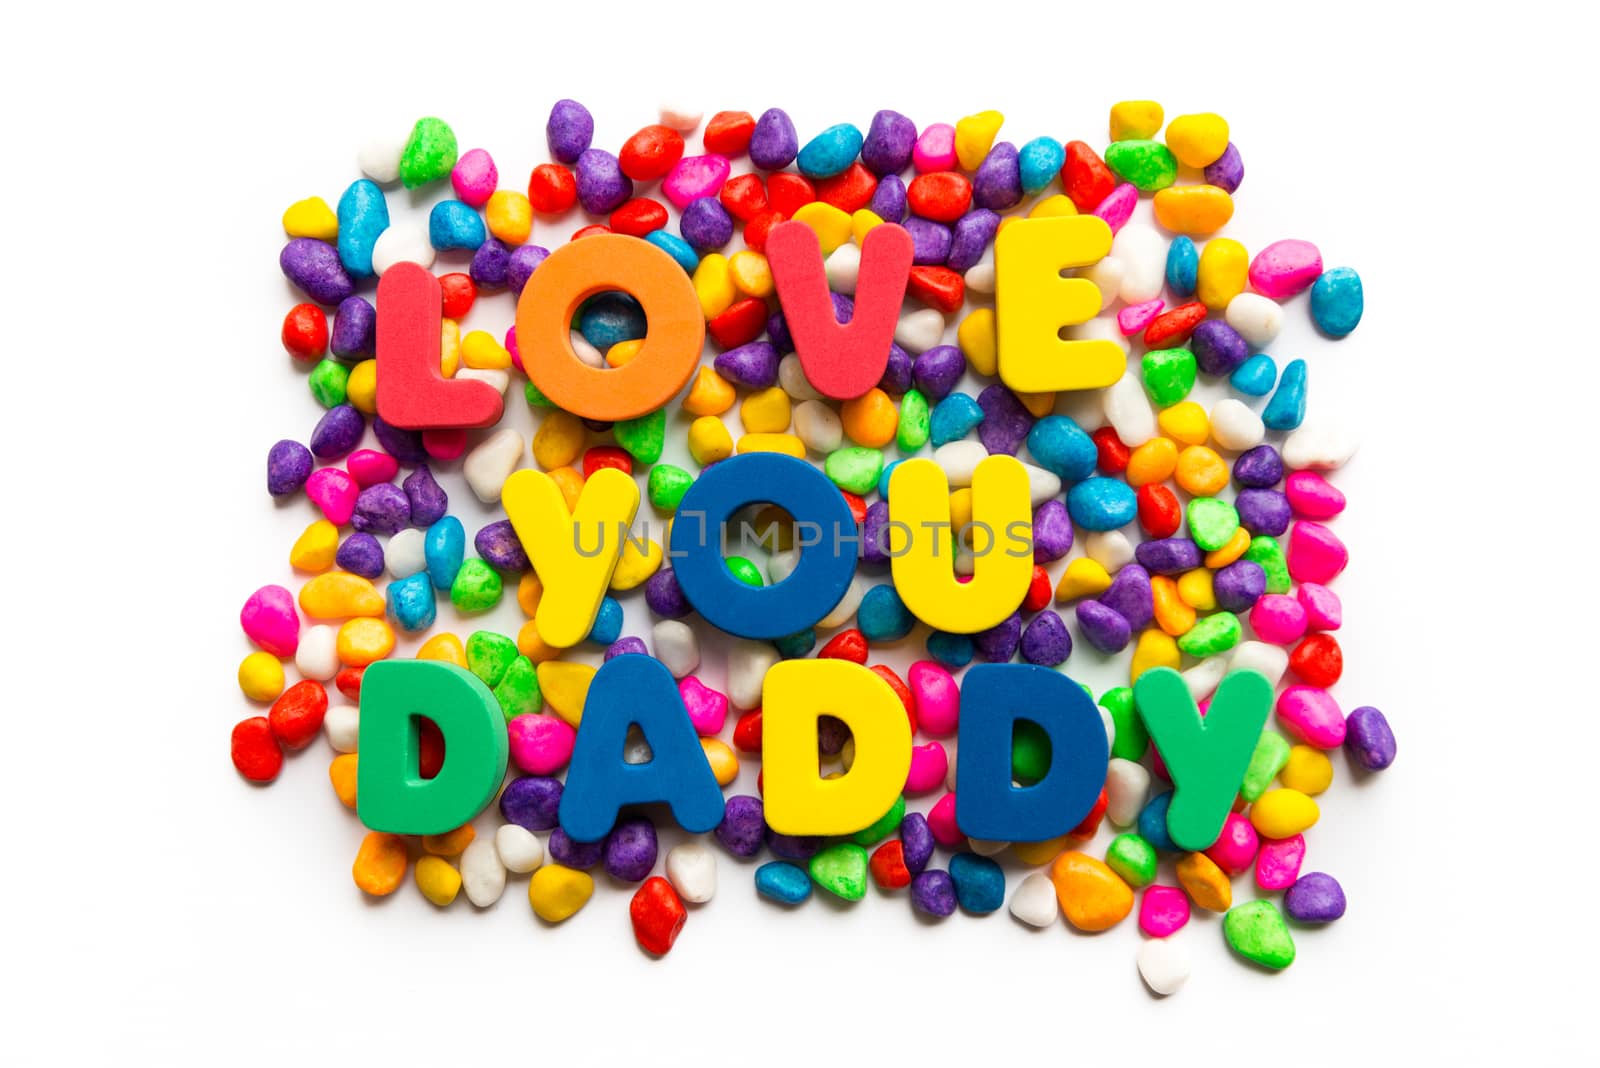 love you daddy by sohel.parvez@hotmail.com